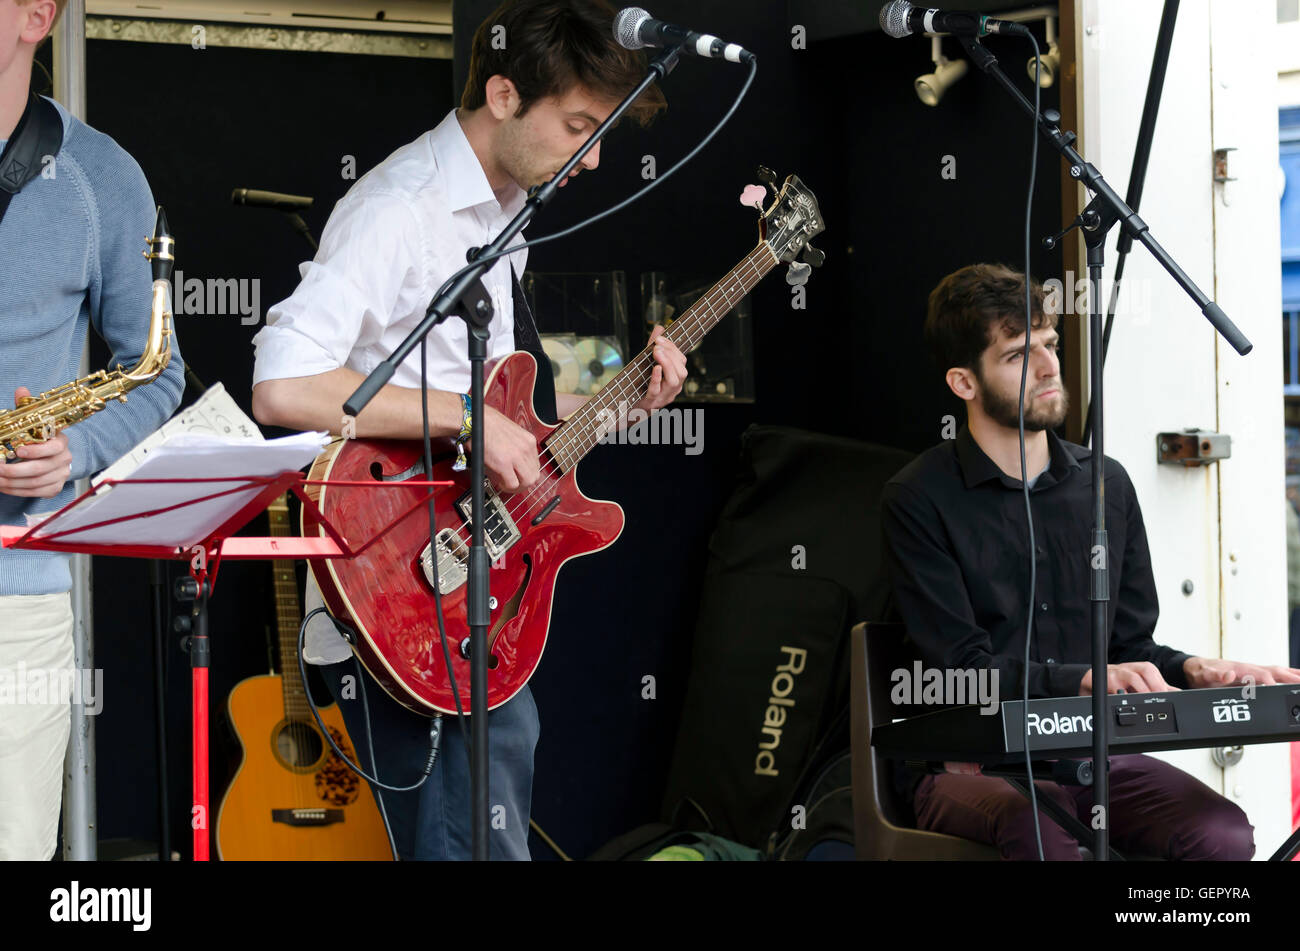 The band Jambouree playing at the Mardi Gras, part of the Edinburgh Jazz Festival. Stock Photo